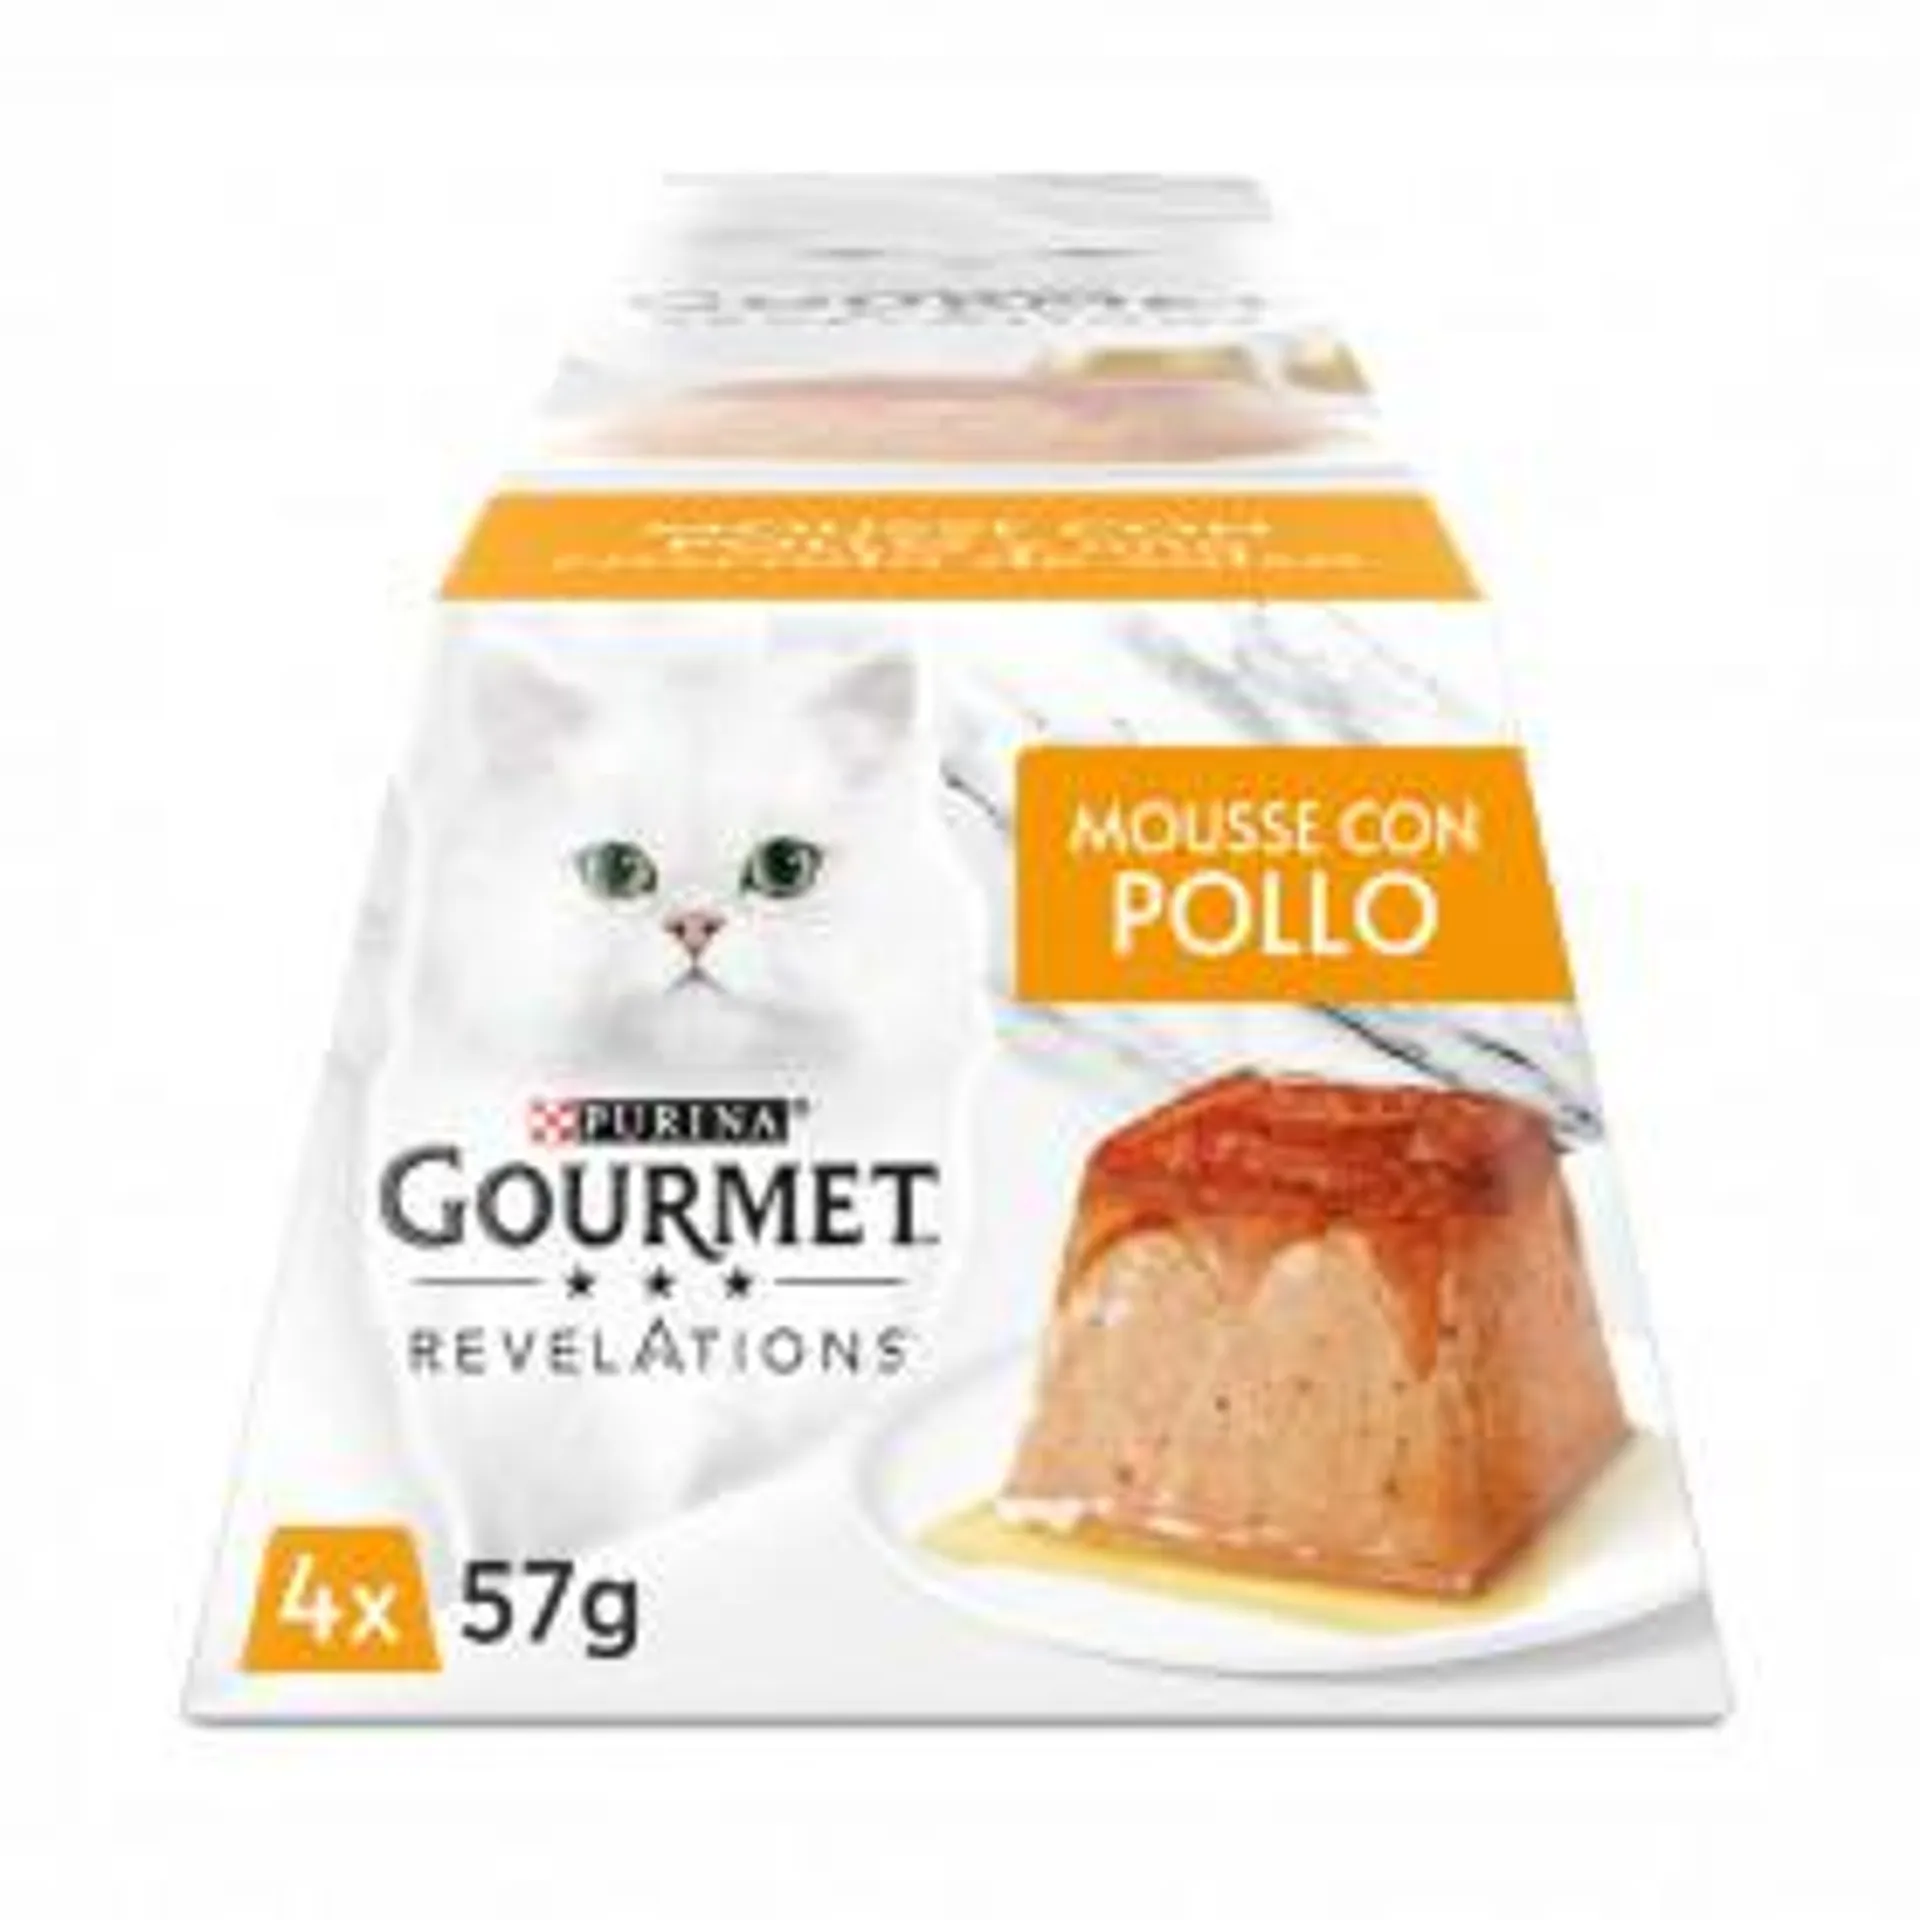 Purina Gourmet Revelations Mousse con Pollo